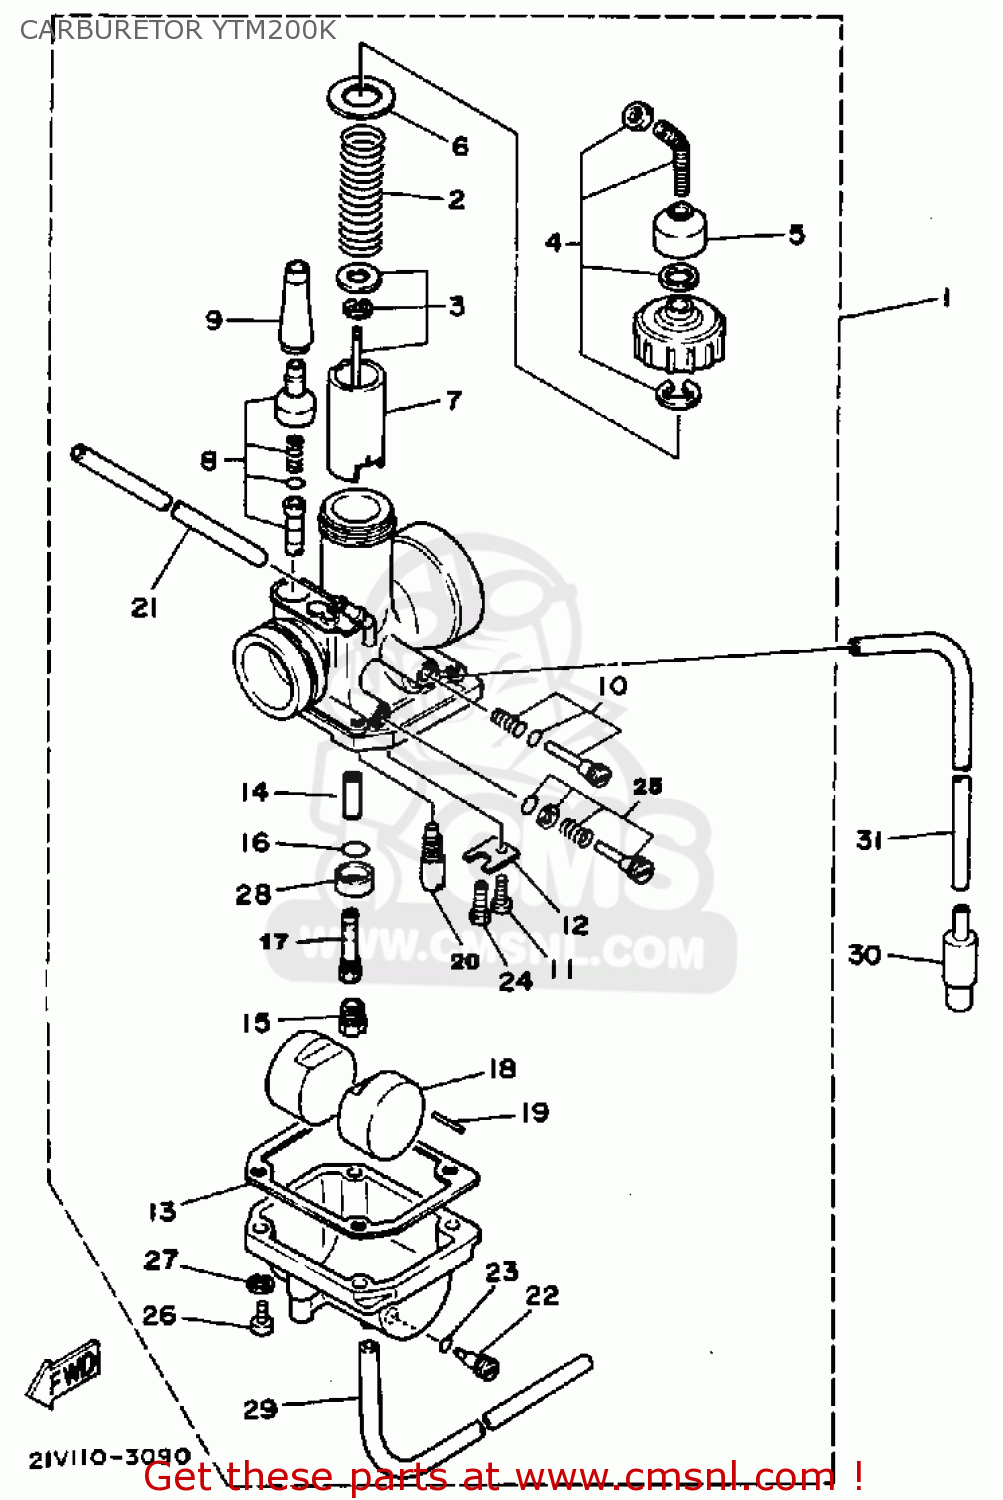 yamaha tw200 carburetor diagram